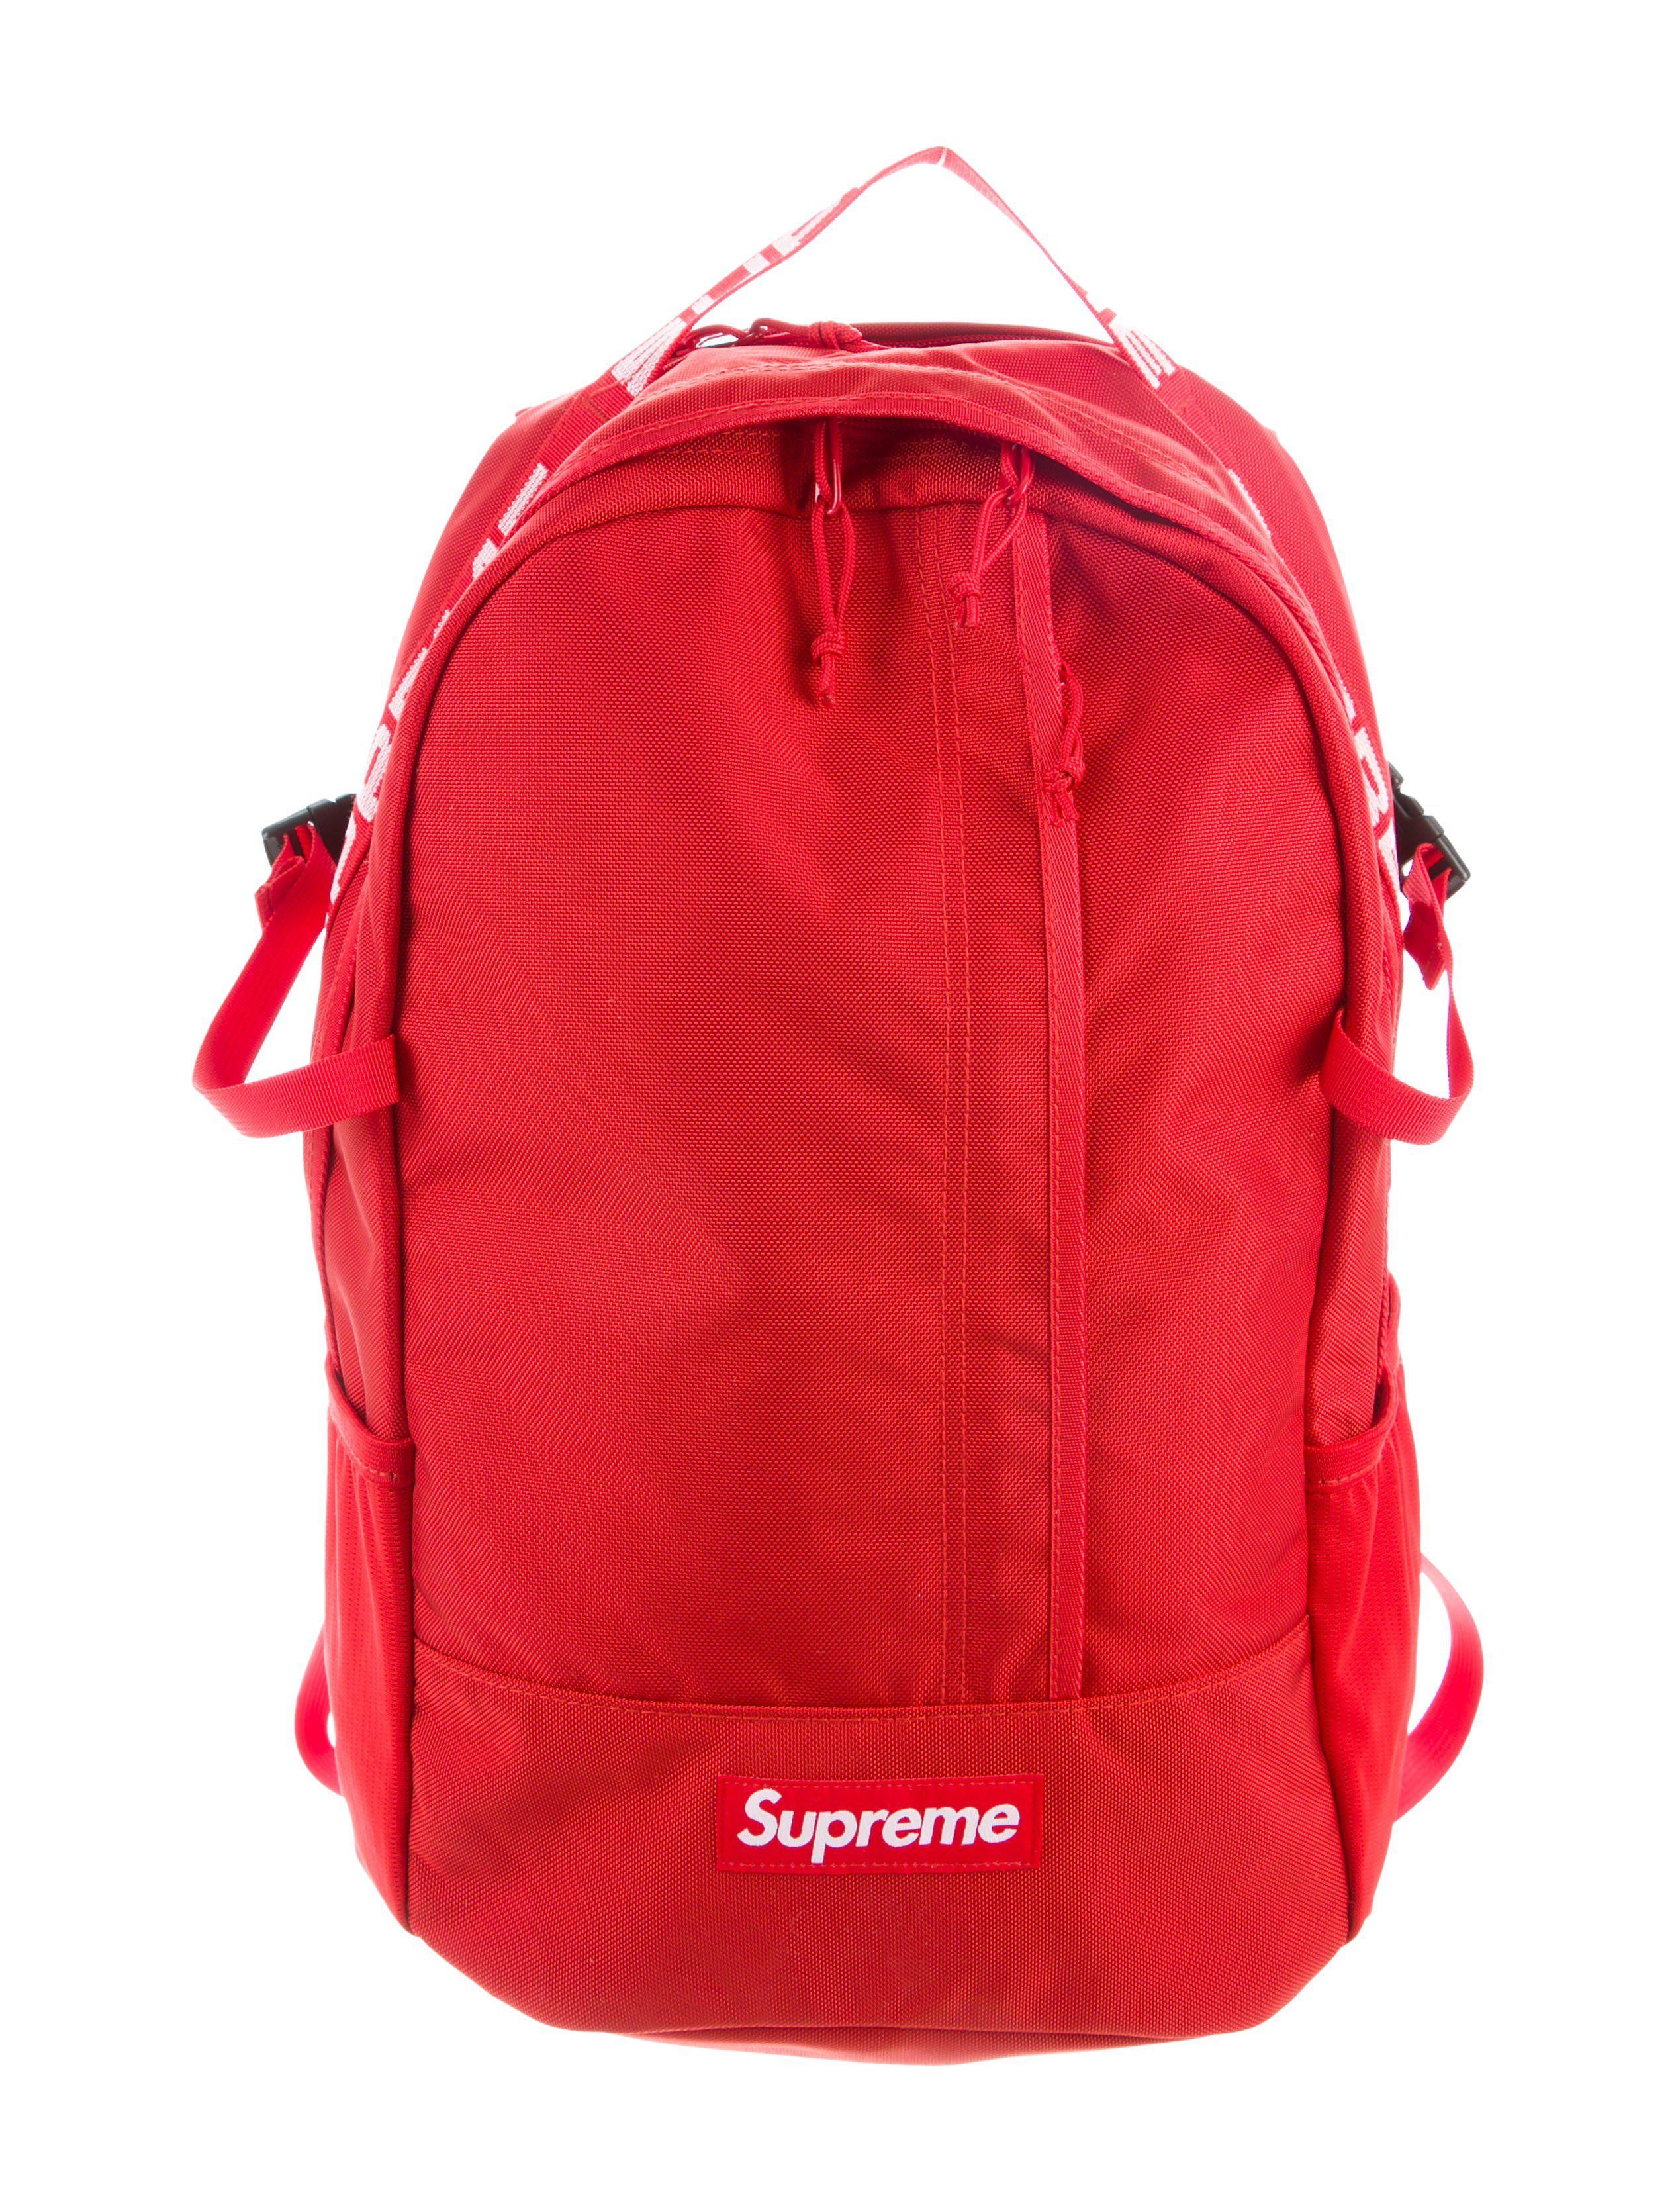 Supreme Bag Logo - Supreme 2018 Box Logo Backpack w/ Tags Online Fashion Shopping Sites